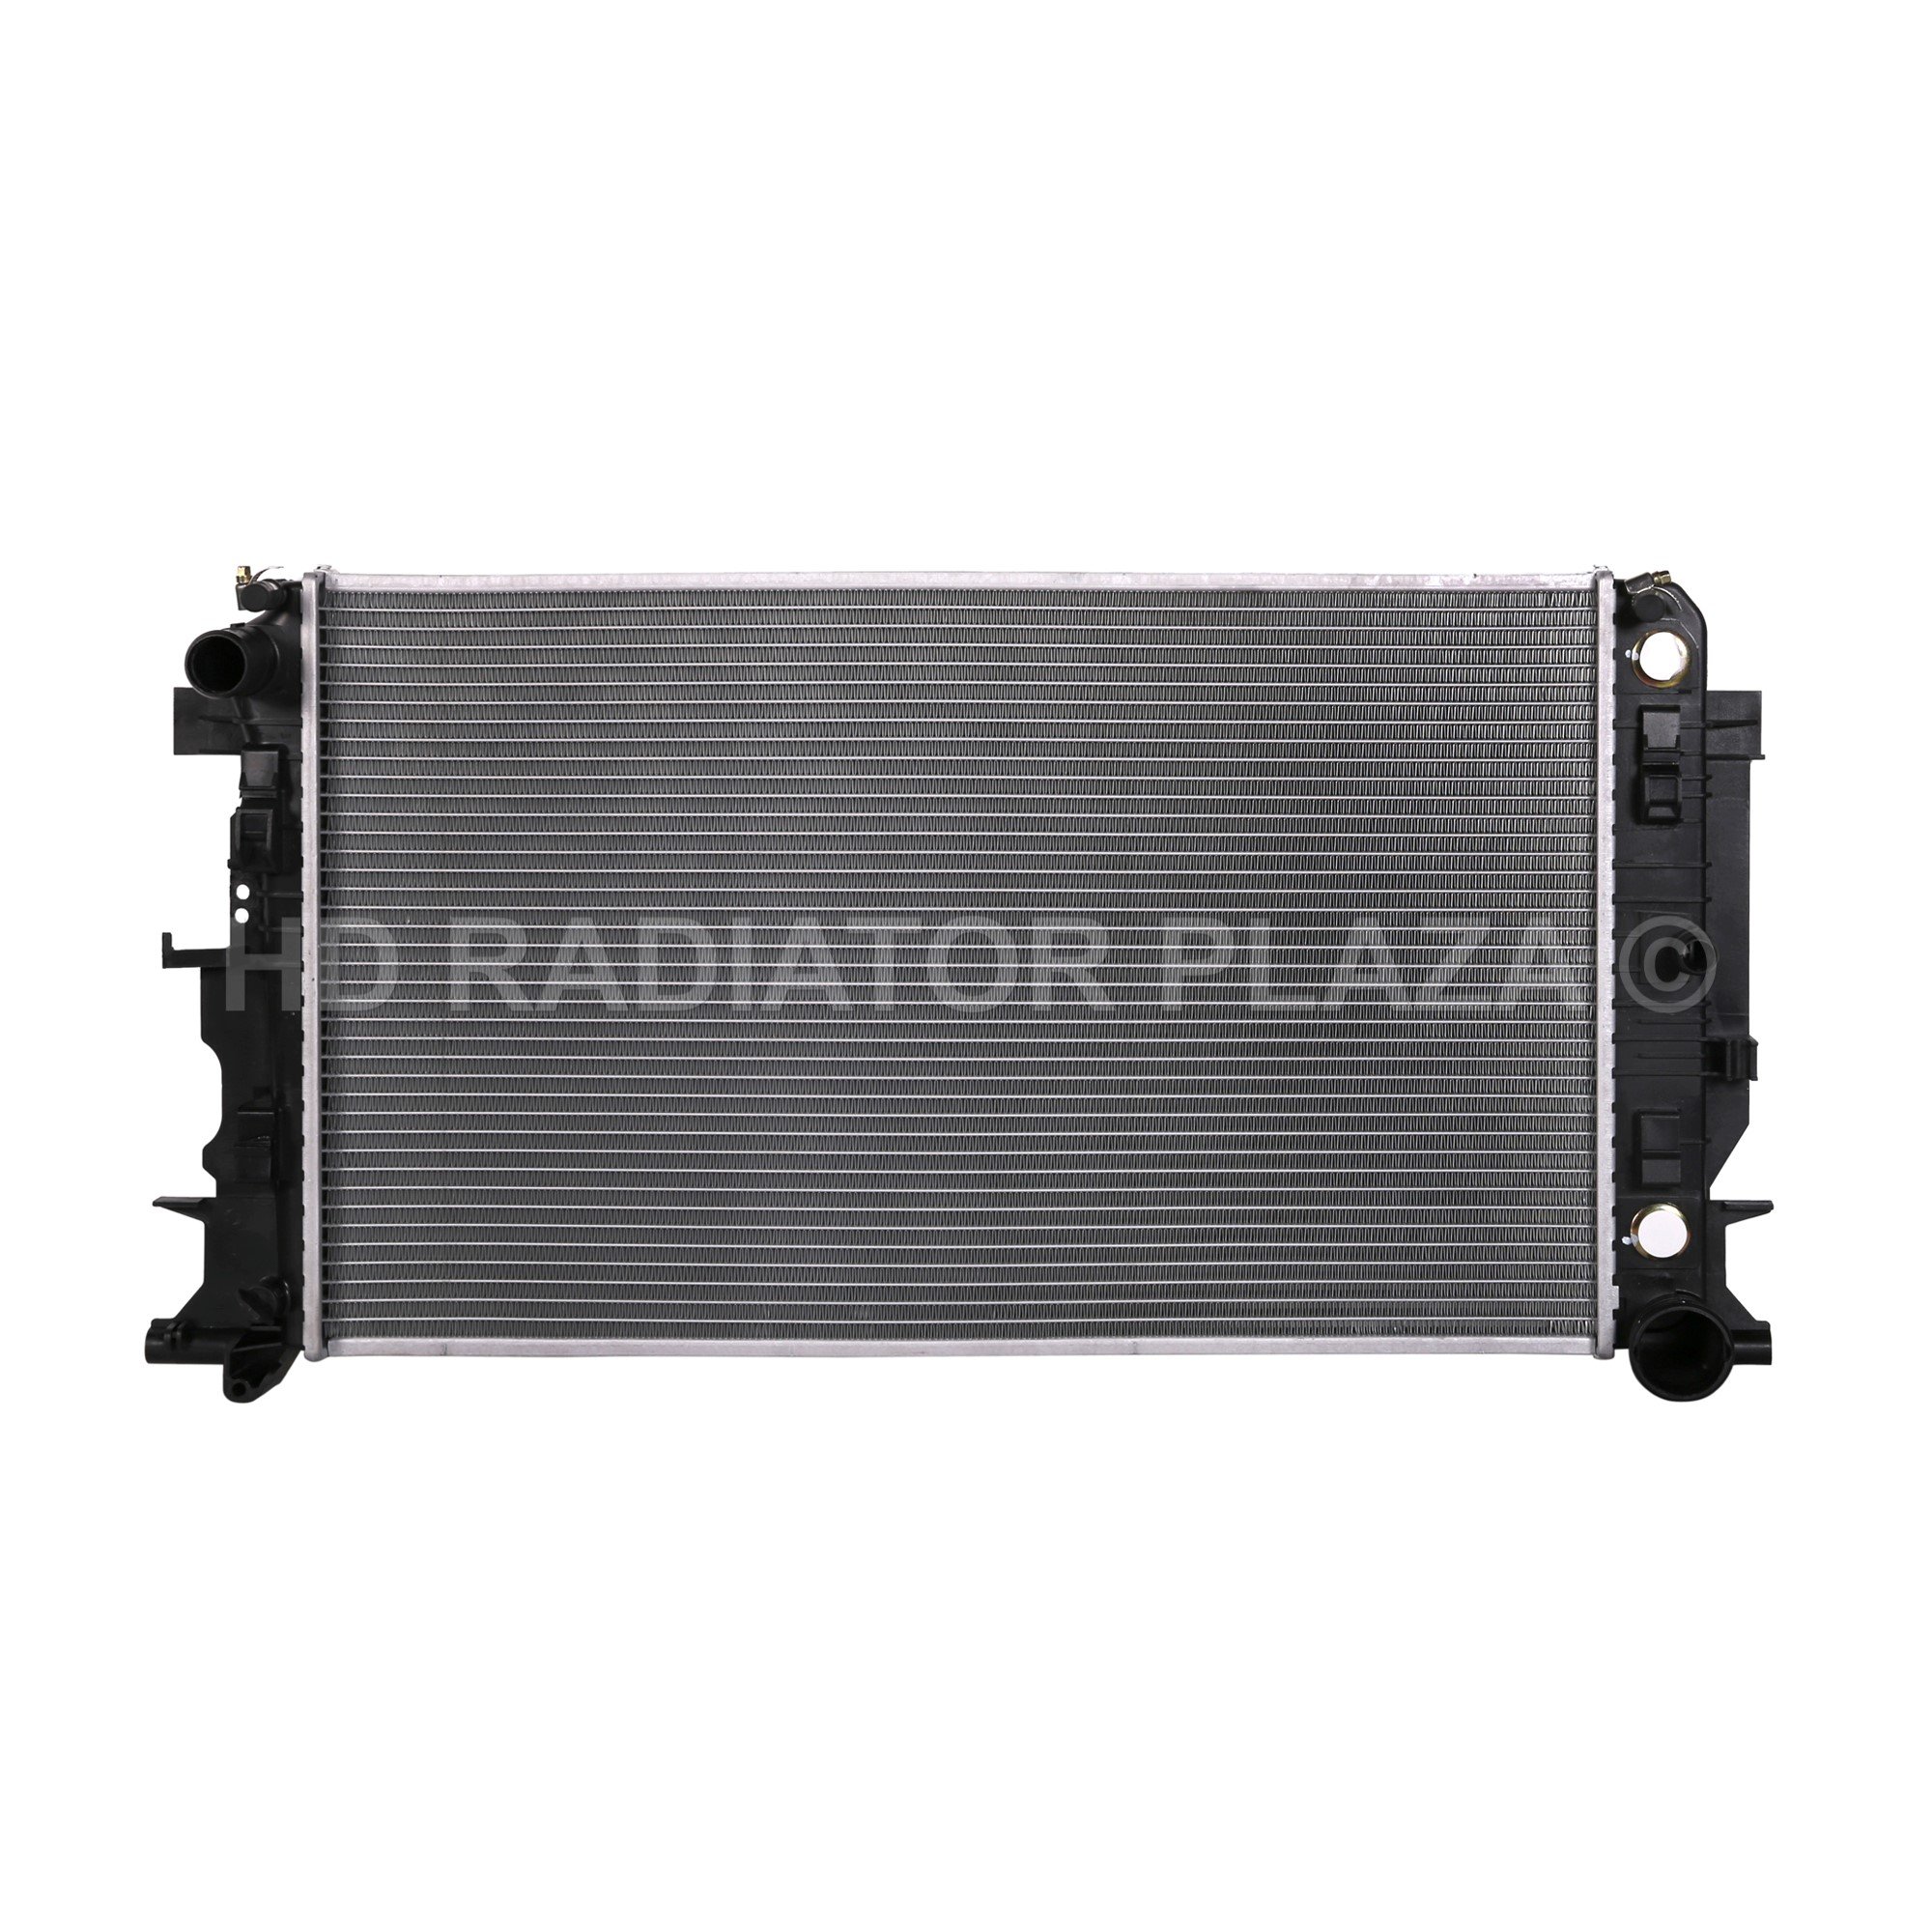 Radiator for 07-13 Sprinter 2500 / Sprinter 3500